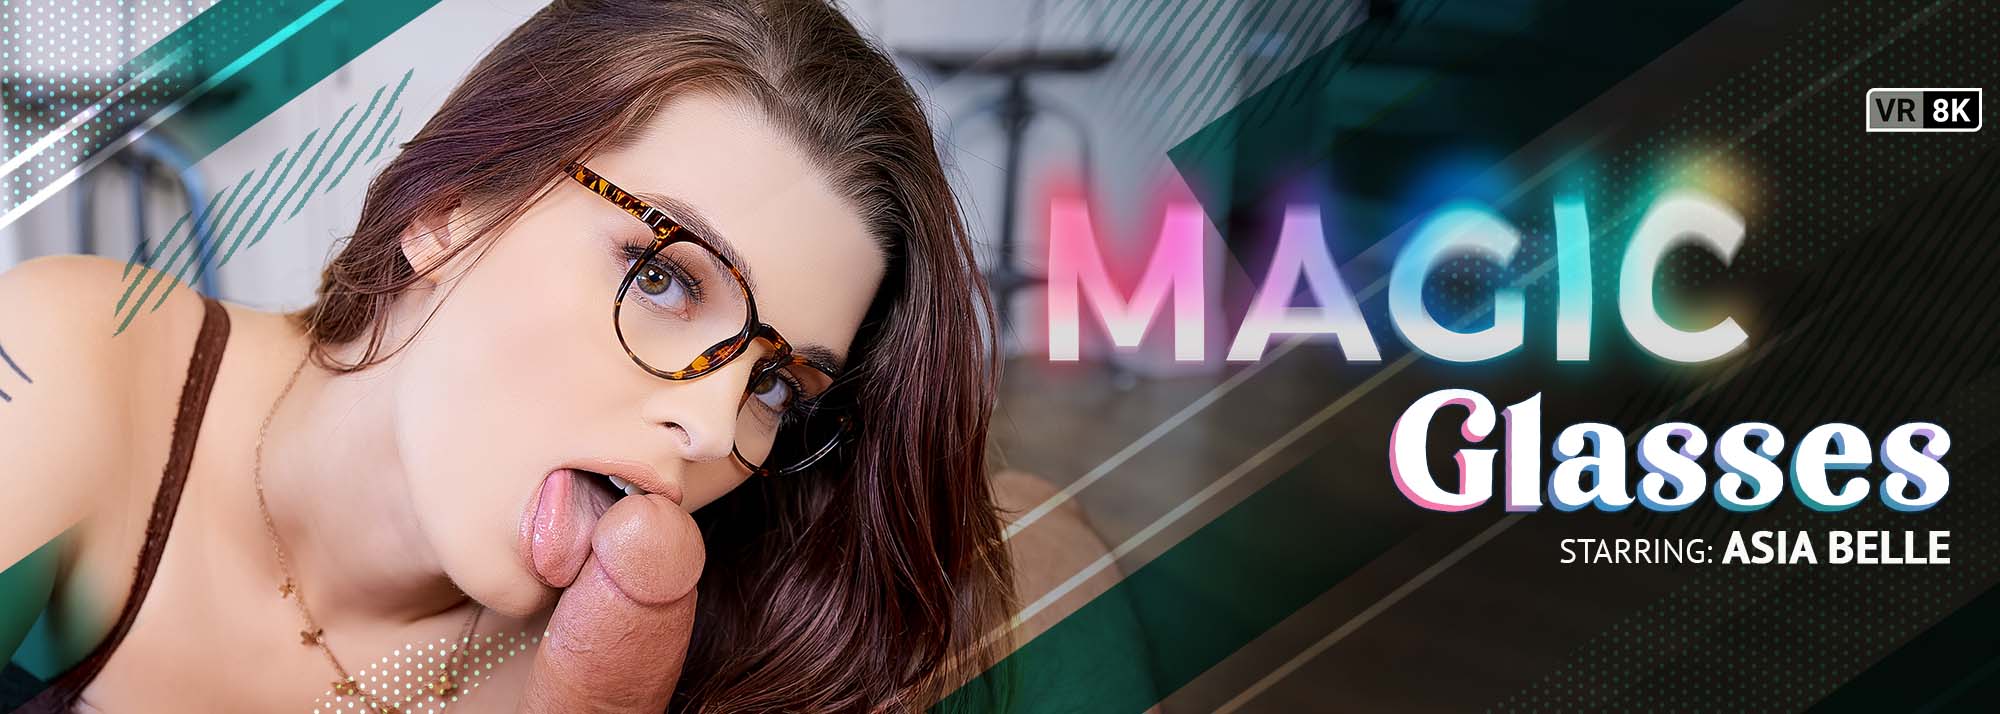 Magic Glasses - Trans VR Porn Video, Starring: Asia Belle